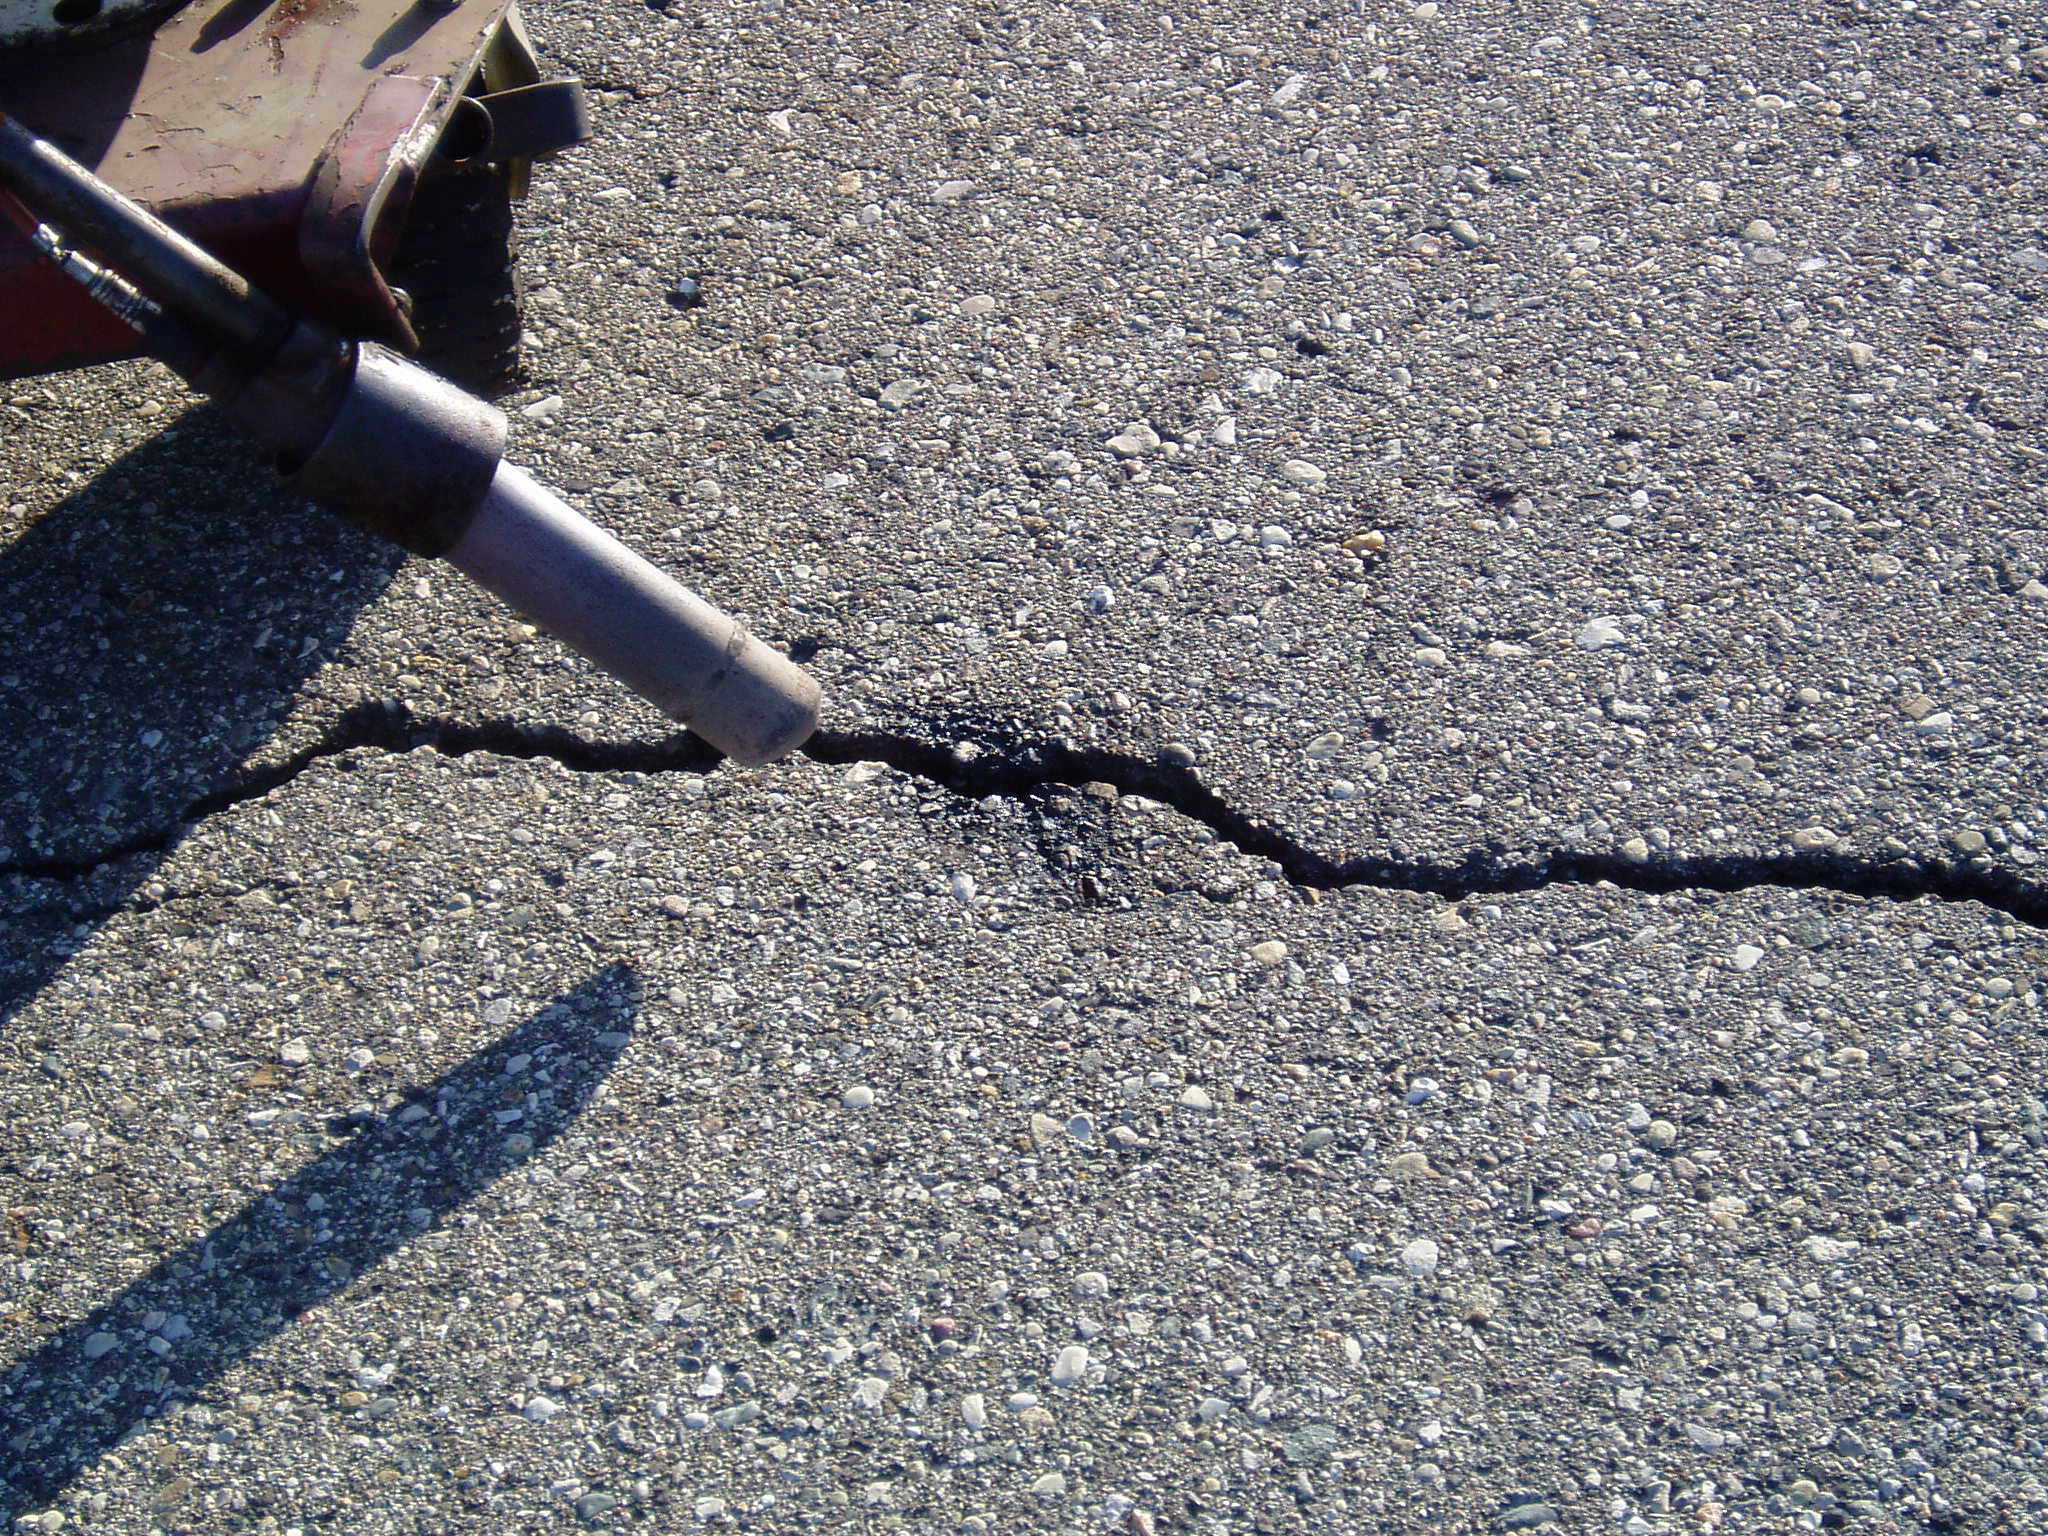 Crack Jet II: Etching cracks prior to filling them may lead to longer-lasting road repairs.